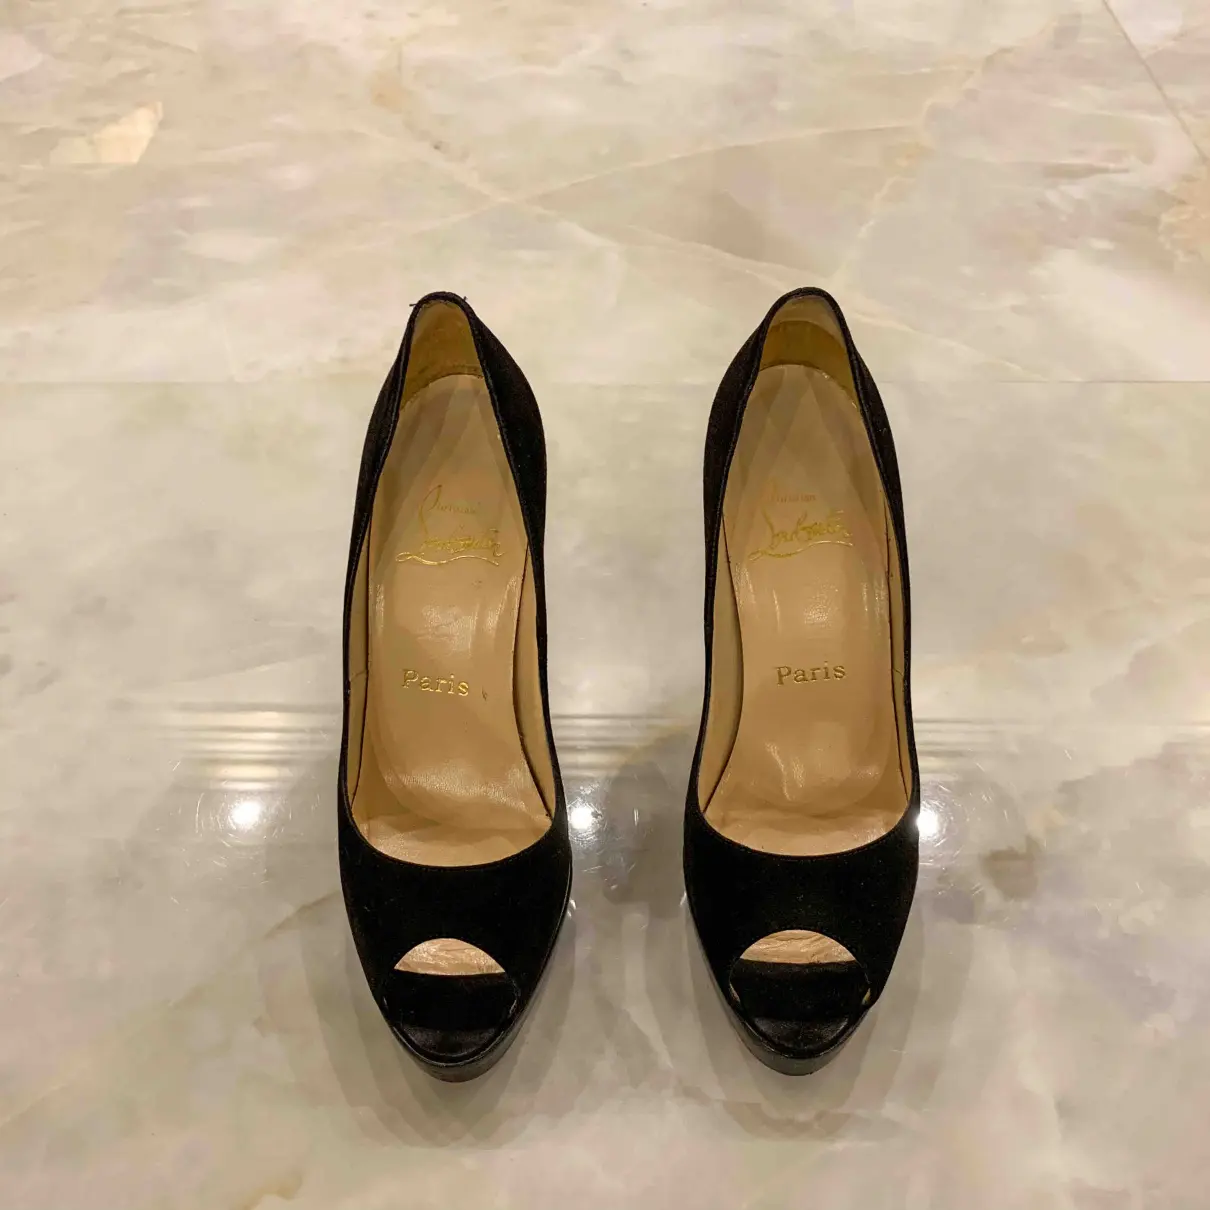 Buy Christian Louboutin Very Privé heels online